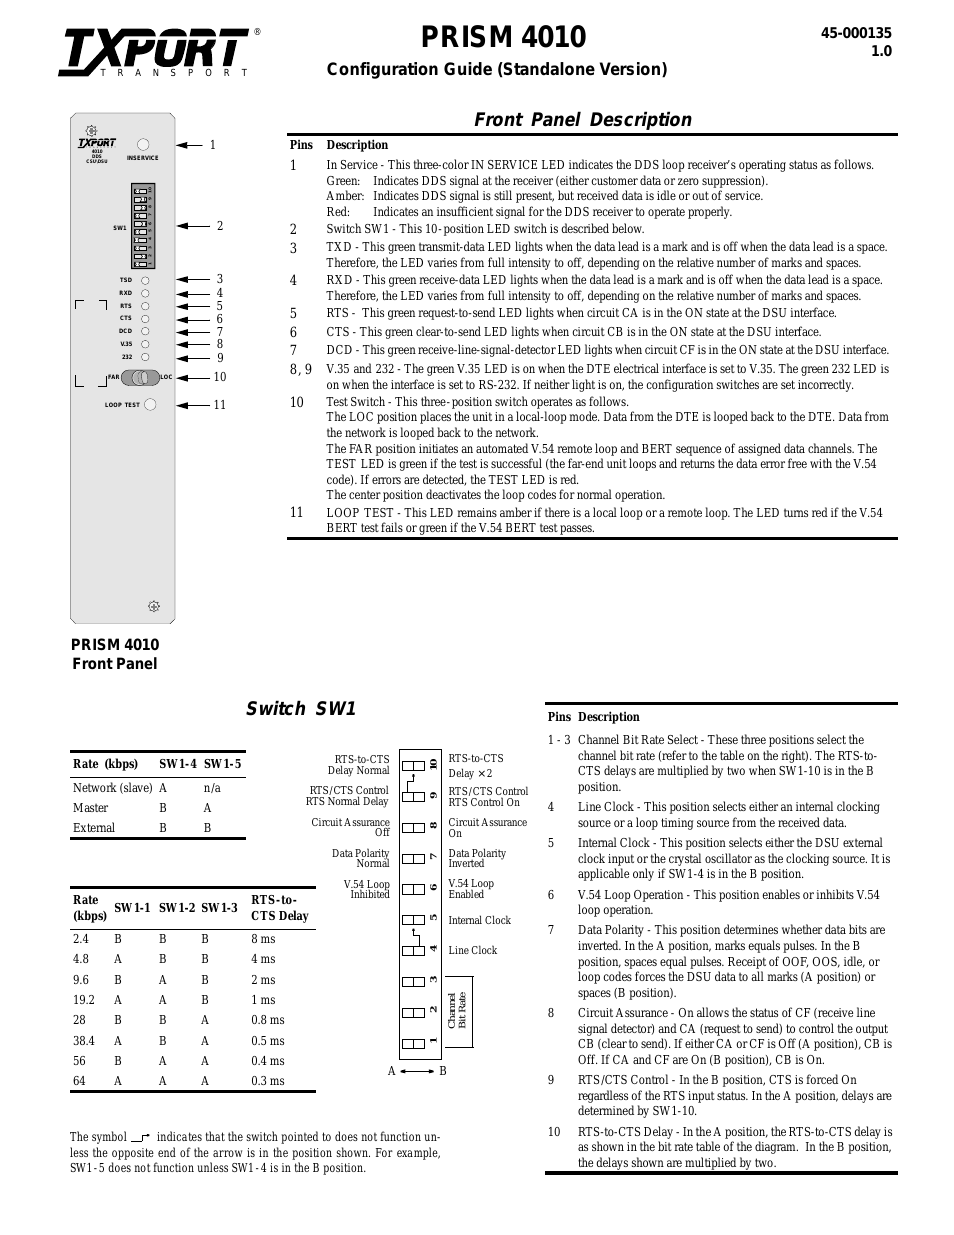 4010 Standalone (CG) Configuration/Installation Guide